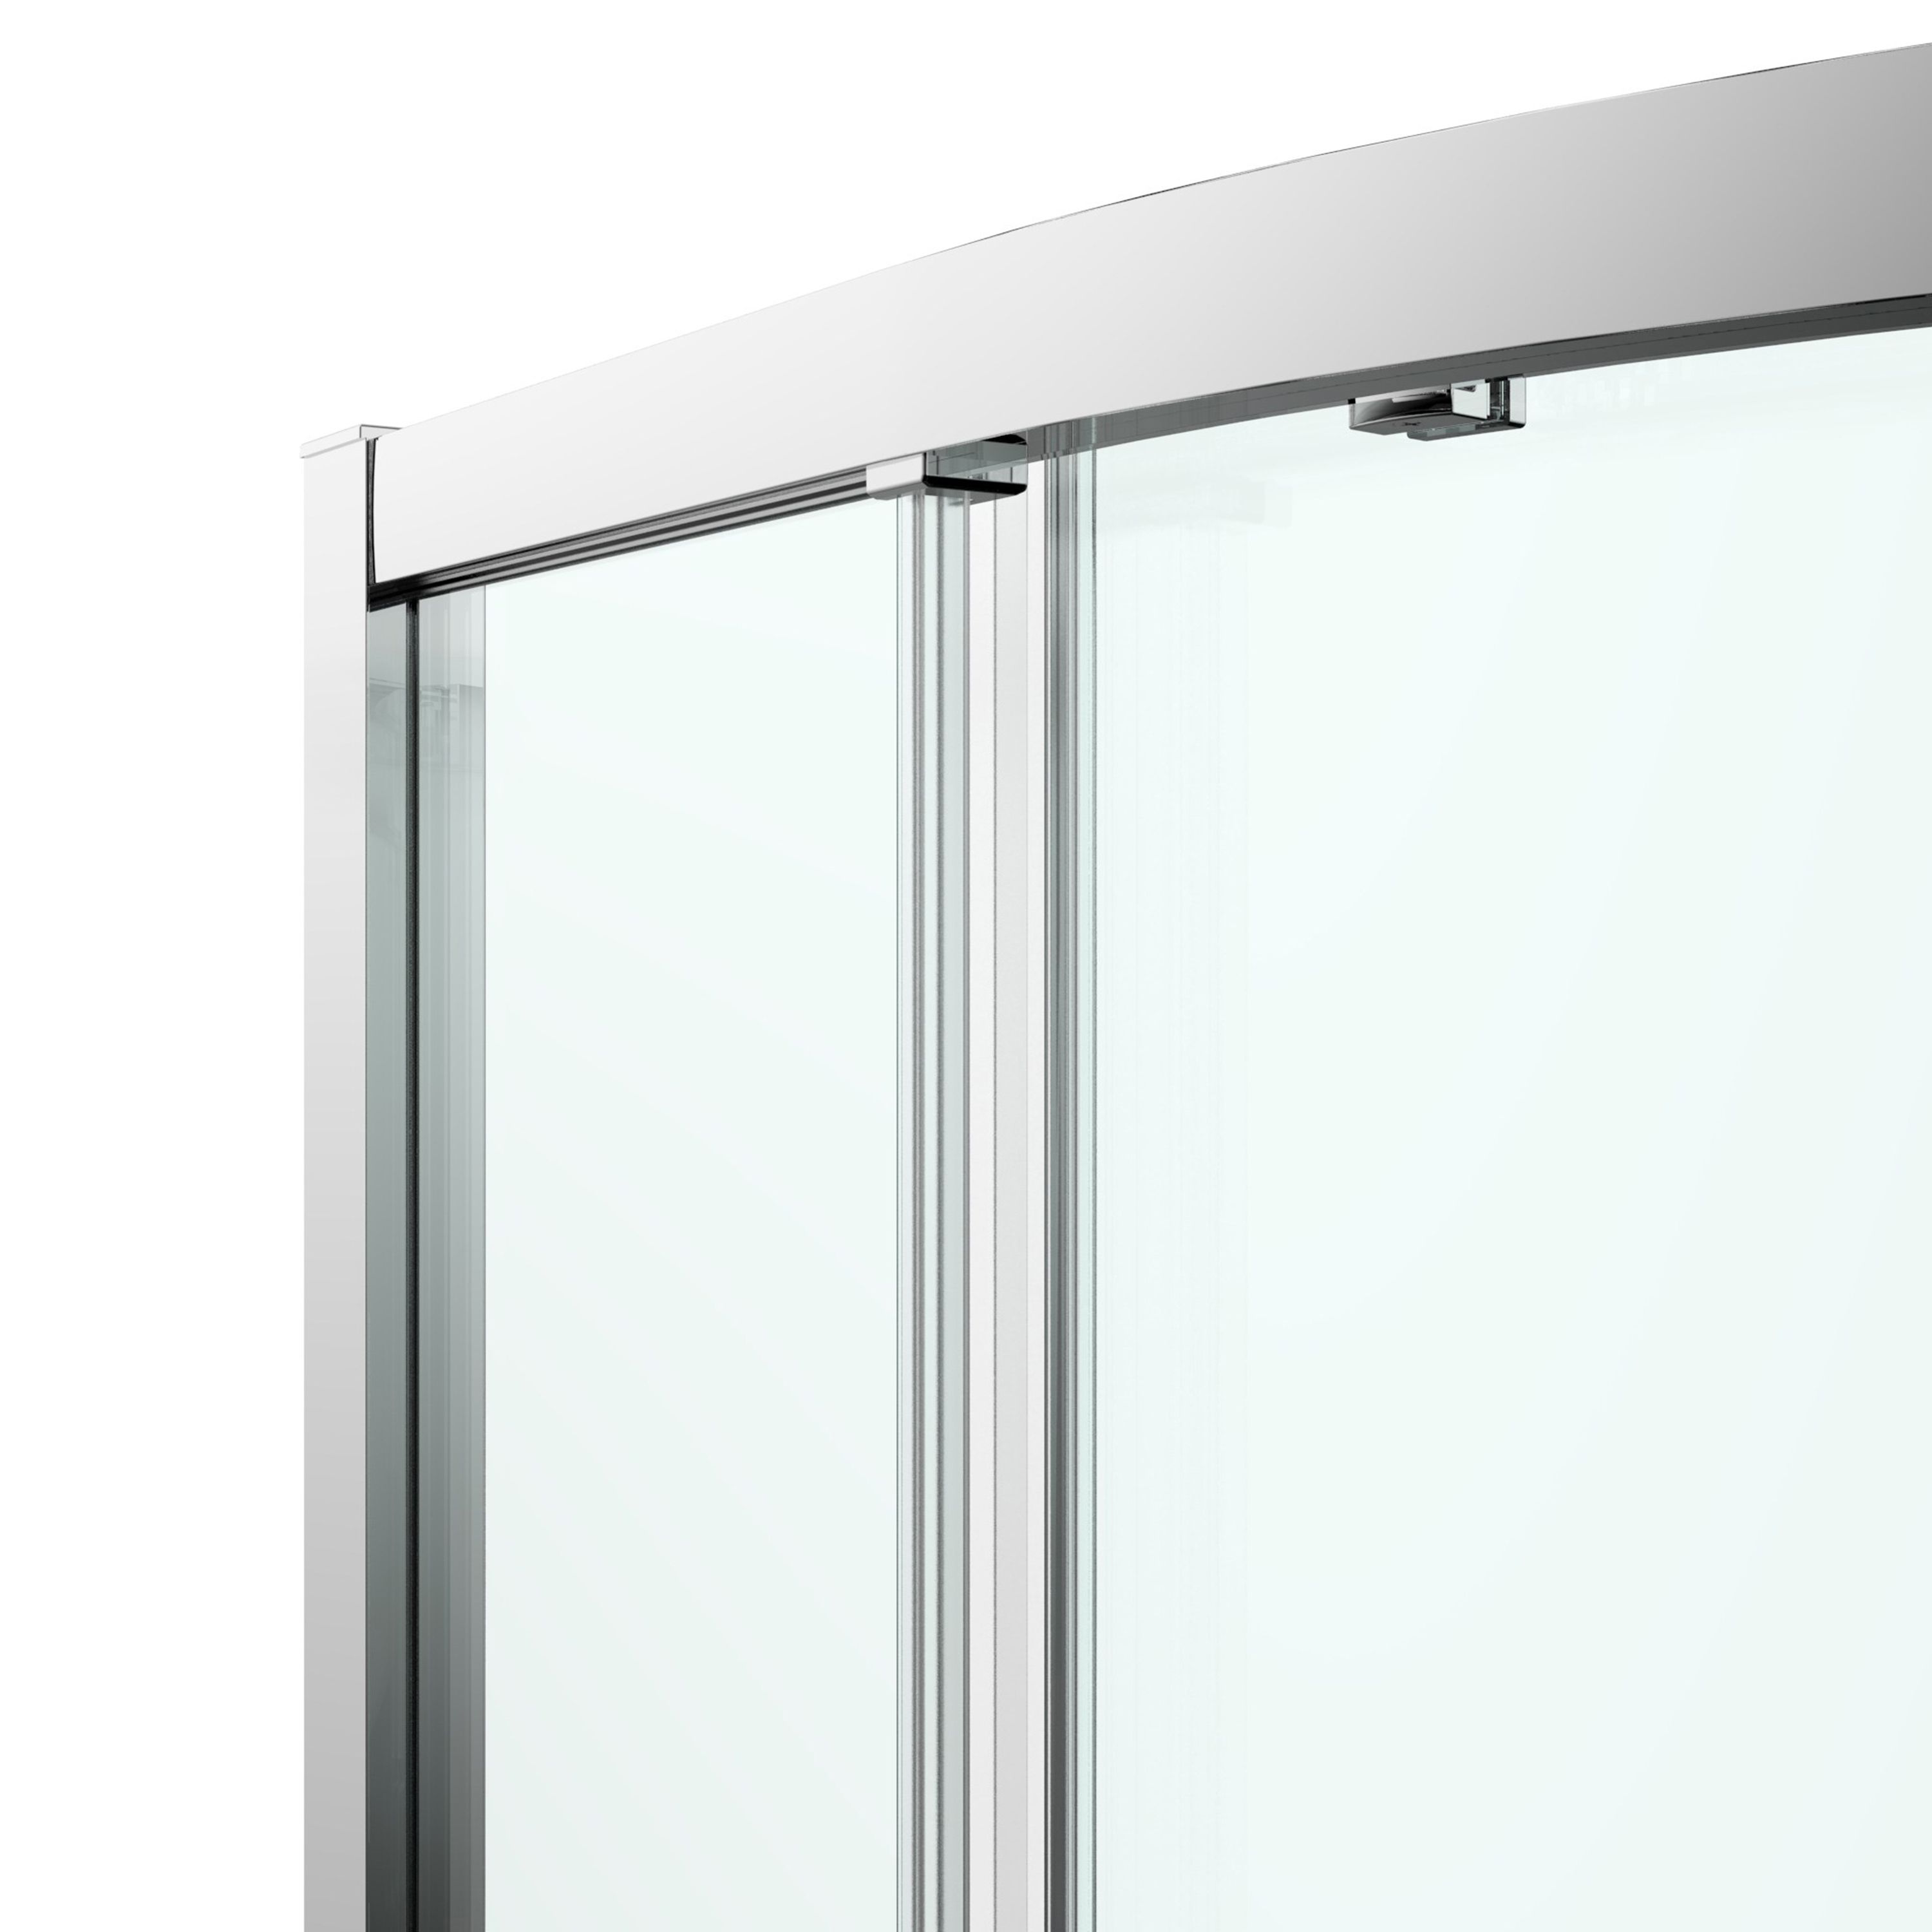 GoodHome Ledava Chrome effect Right-handed Offset quadrant Shower Enclosure & tray - Corner entry double sliding door (H)195cm (W)80cm (D)100cm